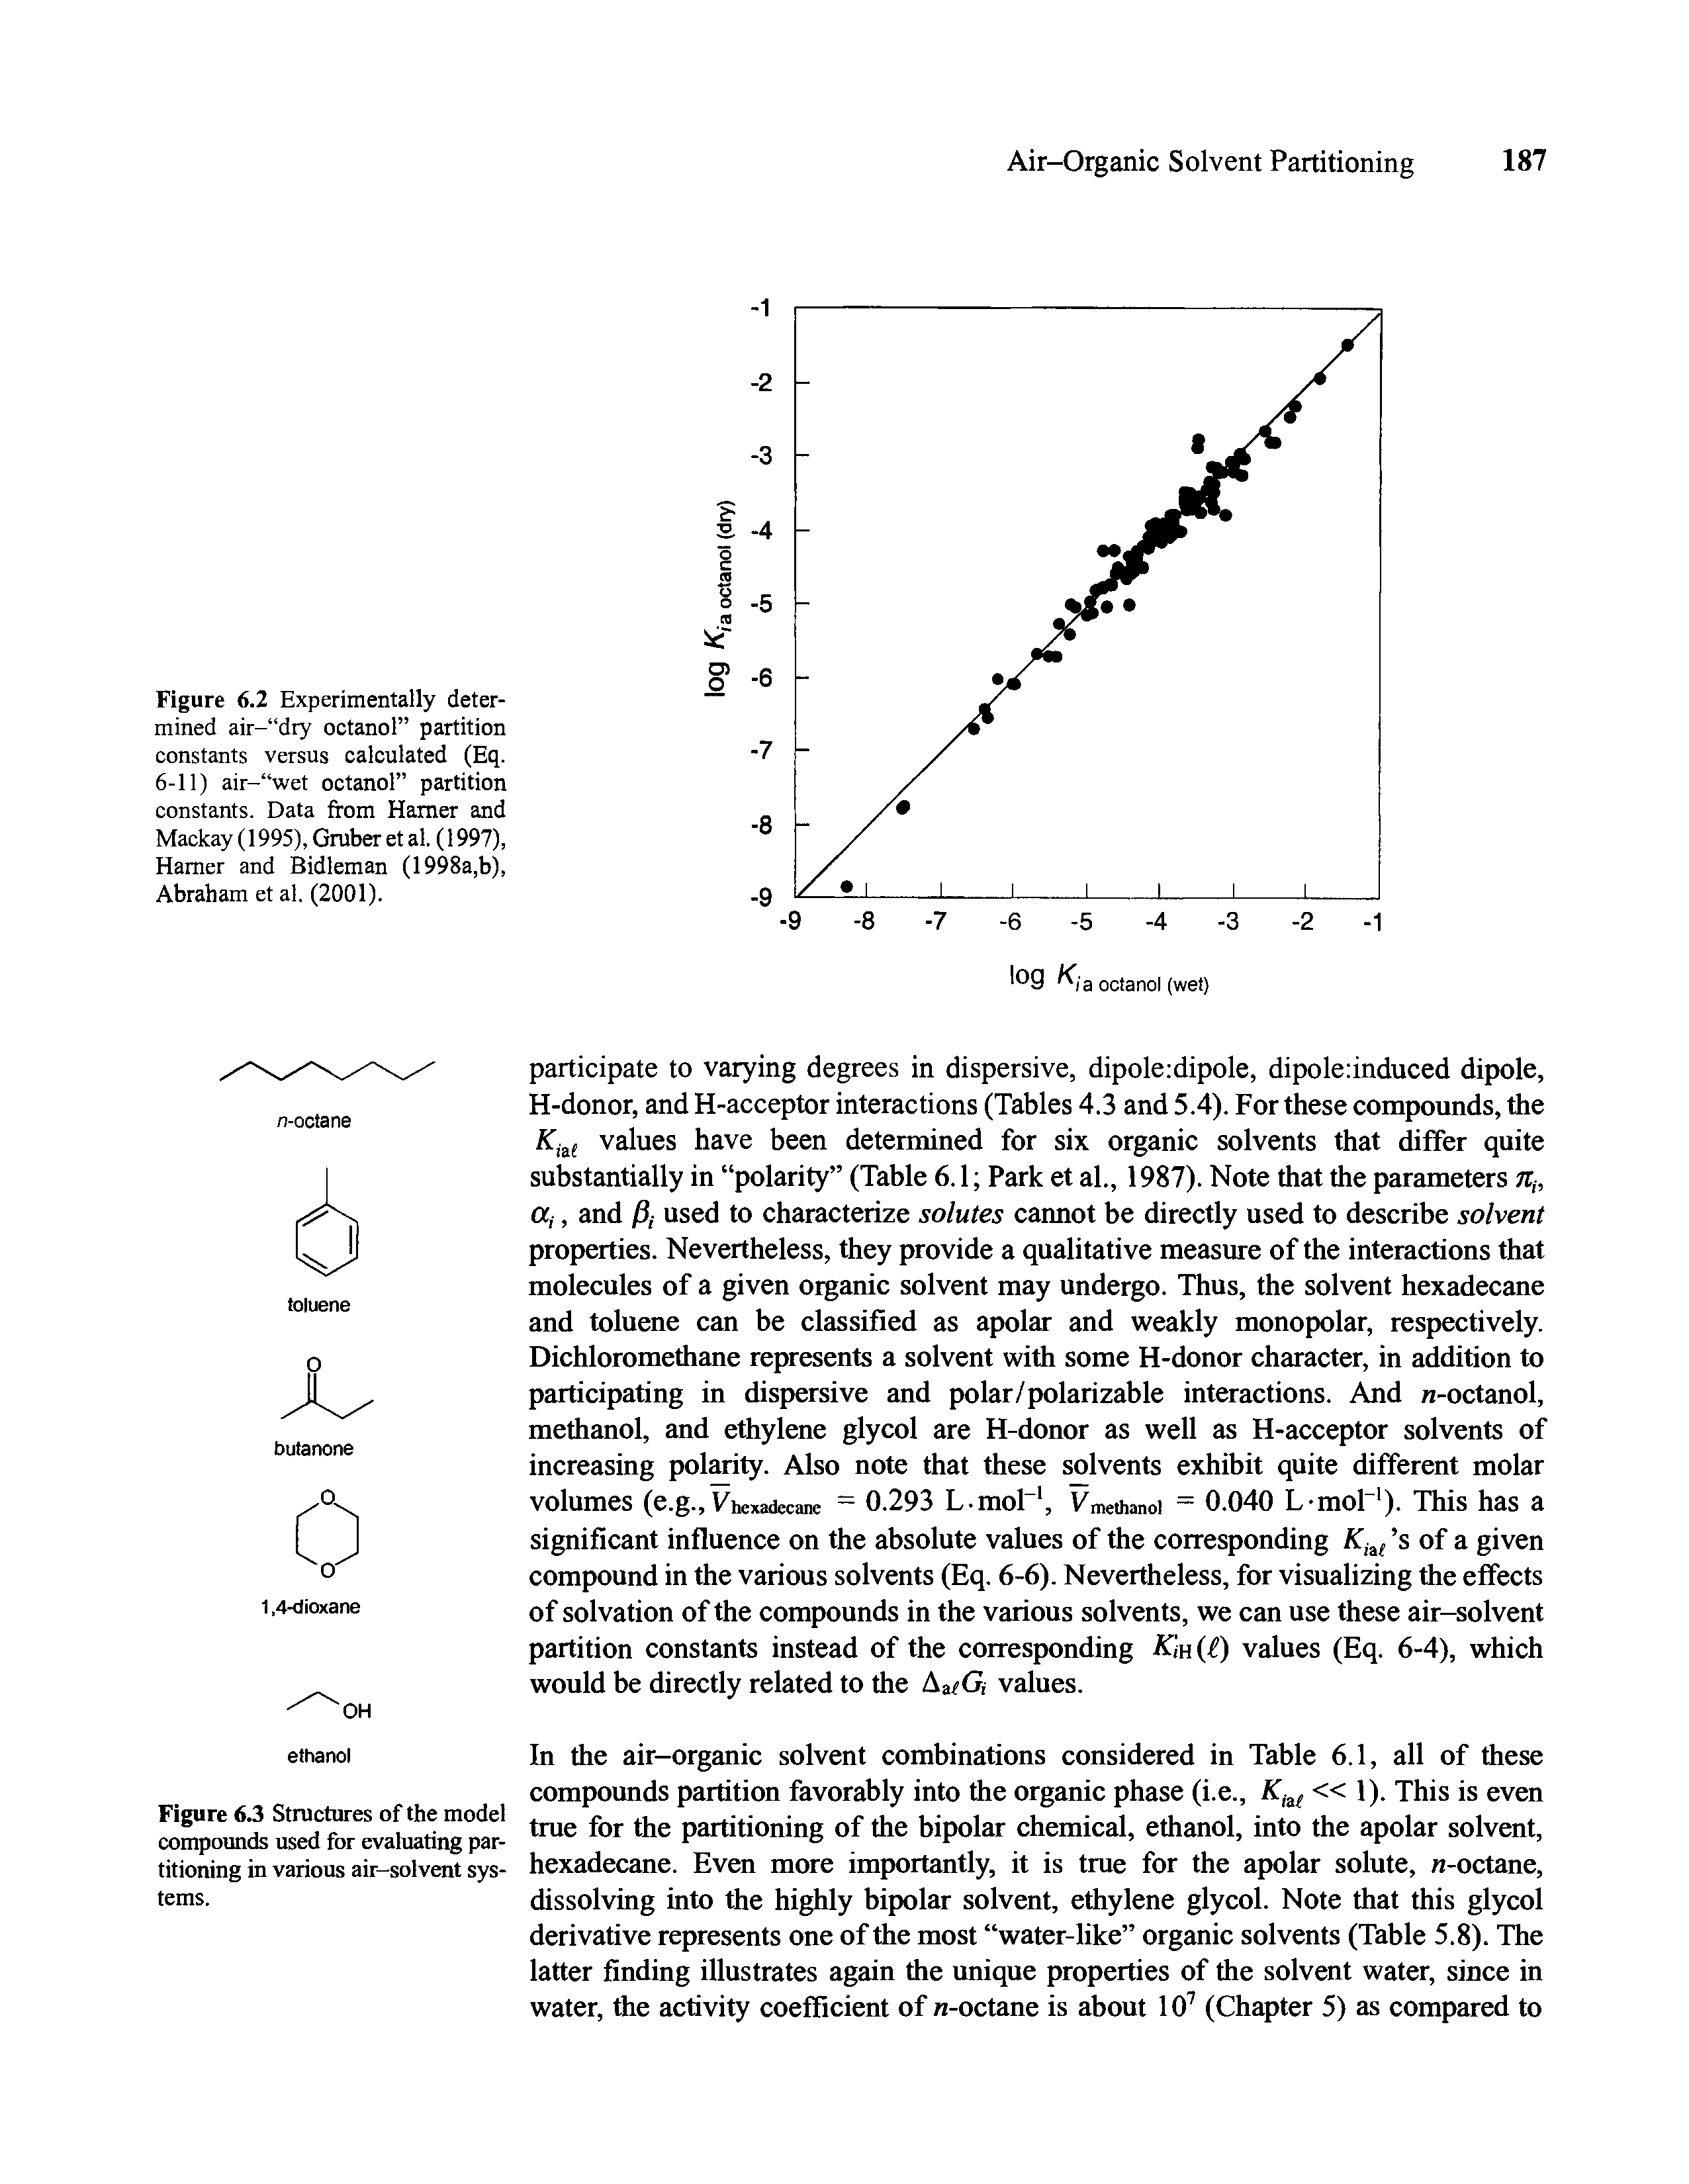 Figure 6.2 Experimentally determined air- dry octanol partition constants versus calculated (Eq. 6-11) air- wet octanol partition constants. Data from Hamer and Mackay (1995), Gruber et al. (1997), Hamer and Bidleman (1998a,b), Abraham et al. (2001).